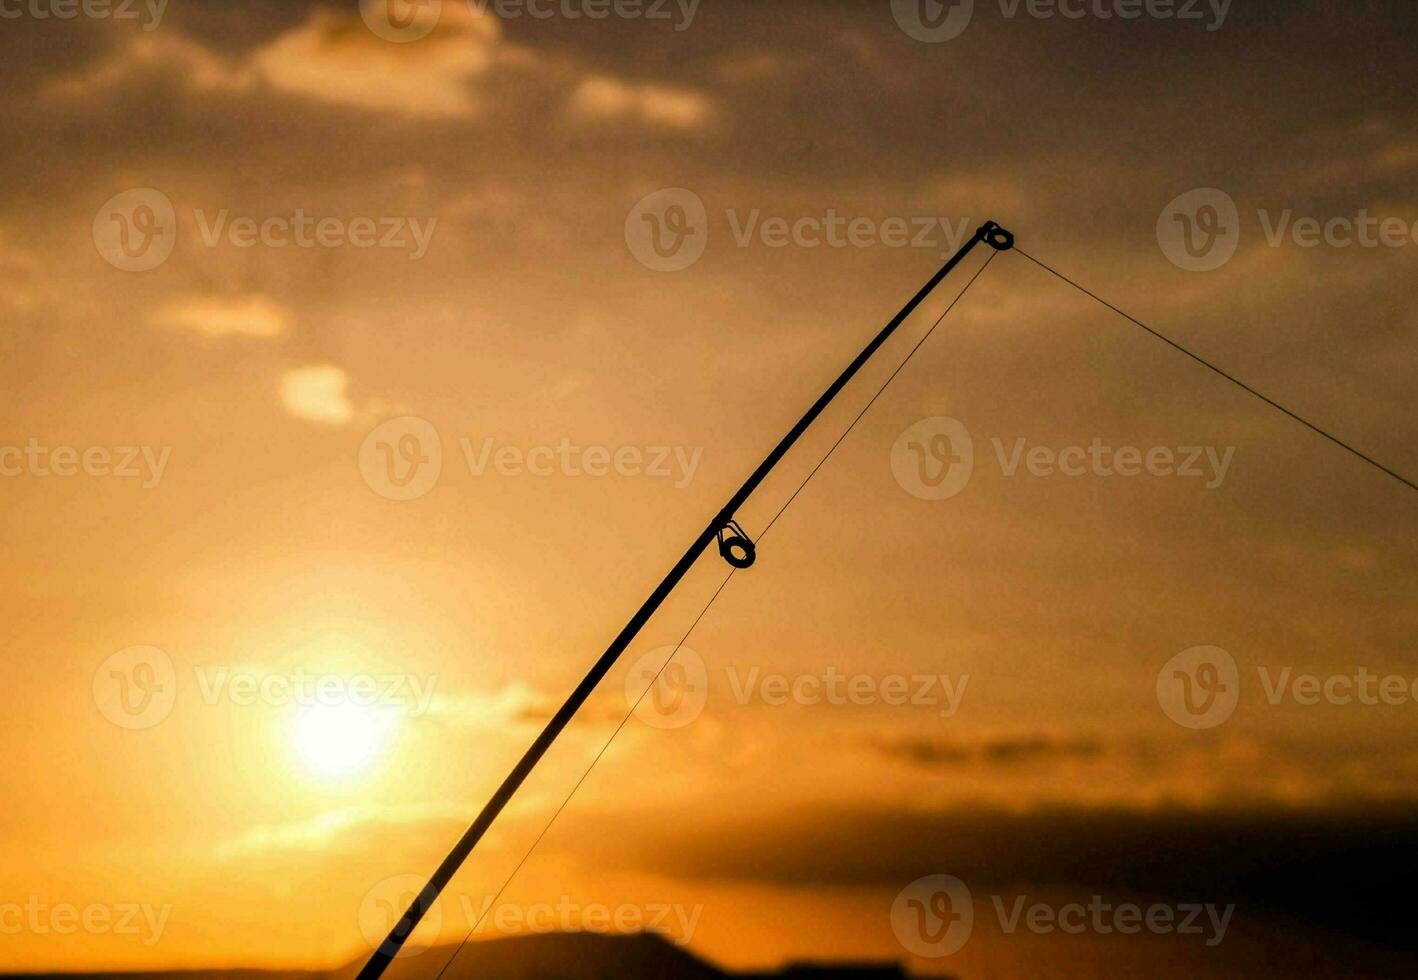 Fishing at sunset photo